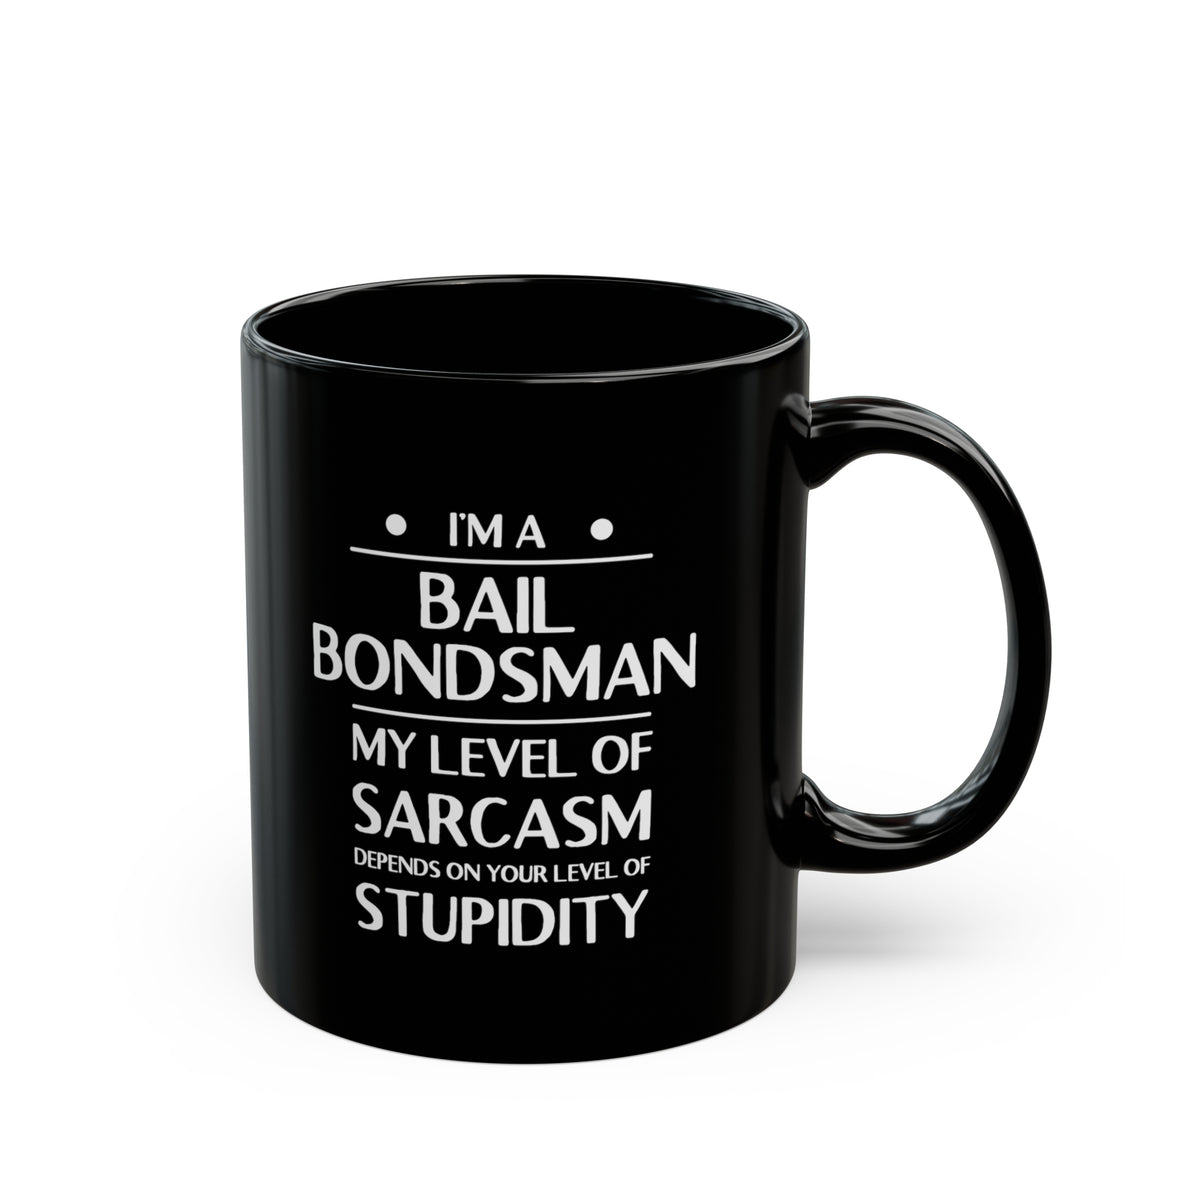 Bail bondsman Black Coffee Mug - My Level of Sarcasm - Birthday, Christmas Gifts For Bail bondsman Coworkers, Colleagues, Men, Women, Mom, Dad